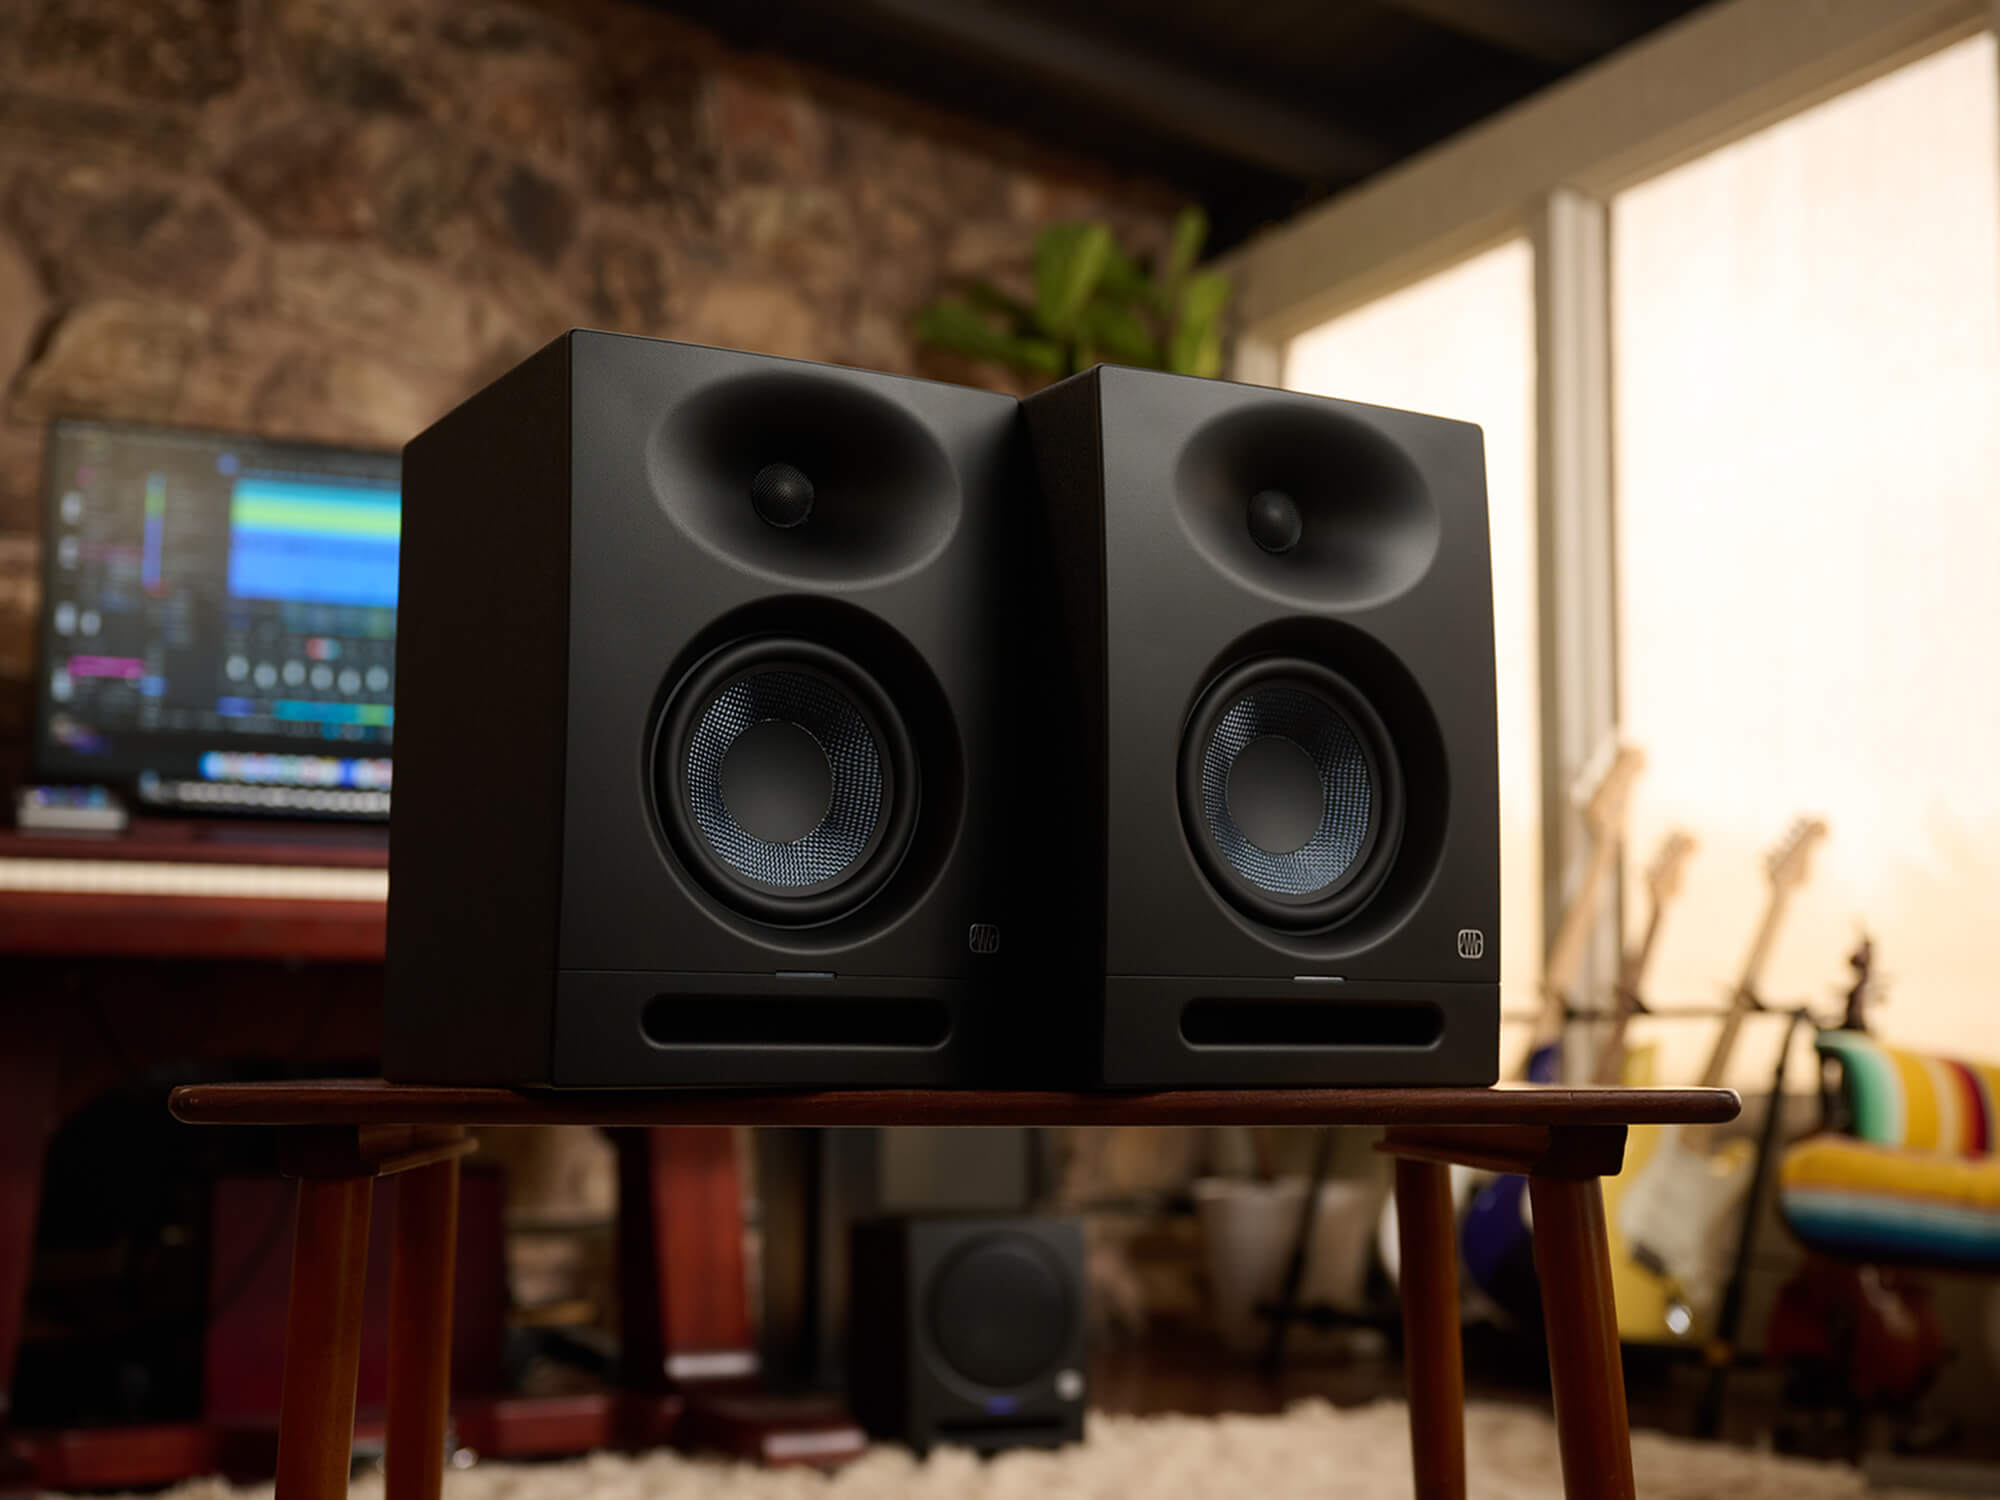 PreSonus Eris Studio 5 monitors in a home studio